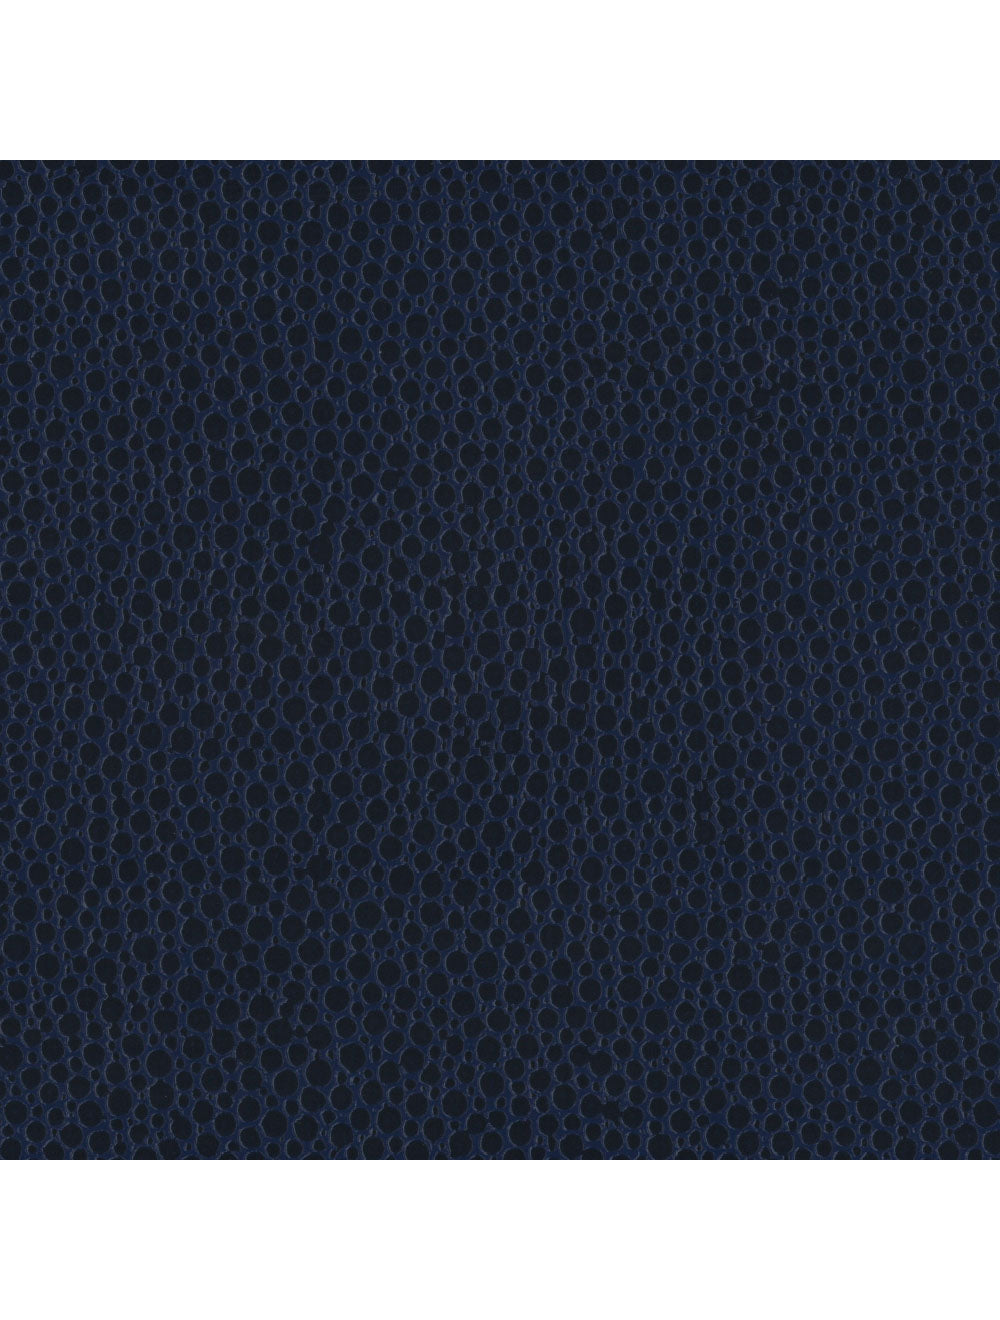 Amostra de Material Berlin Mallory Azul Escuro (PEM9205)